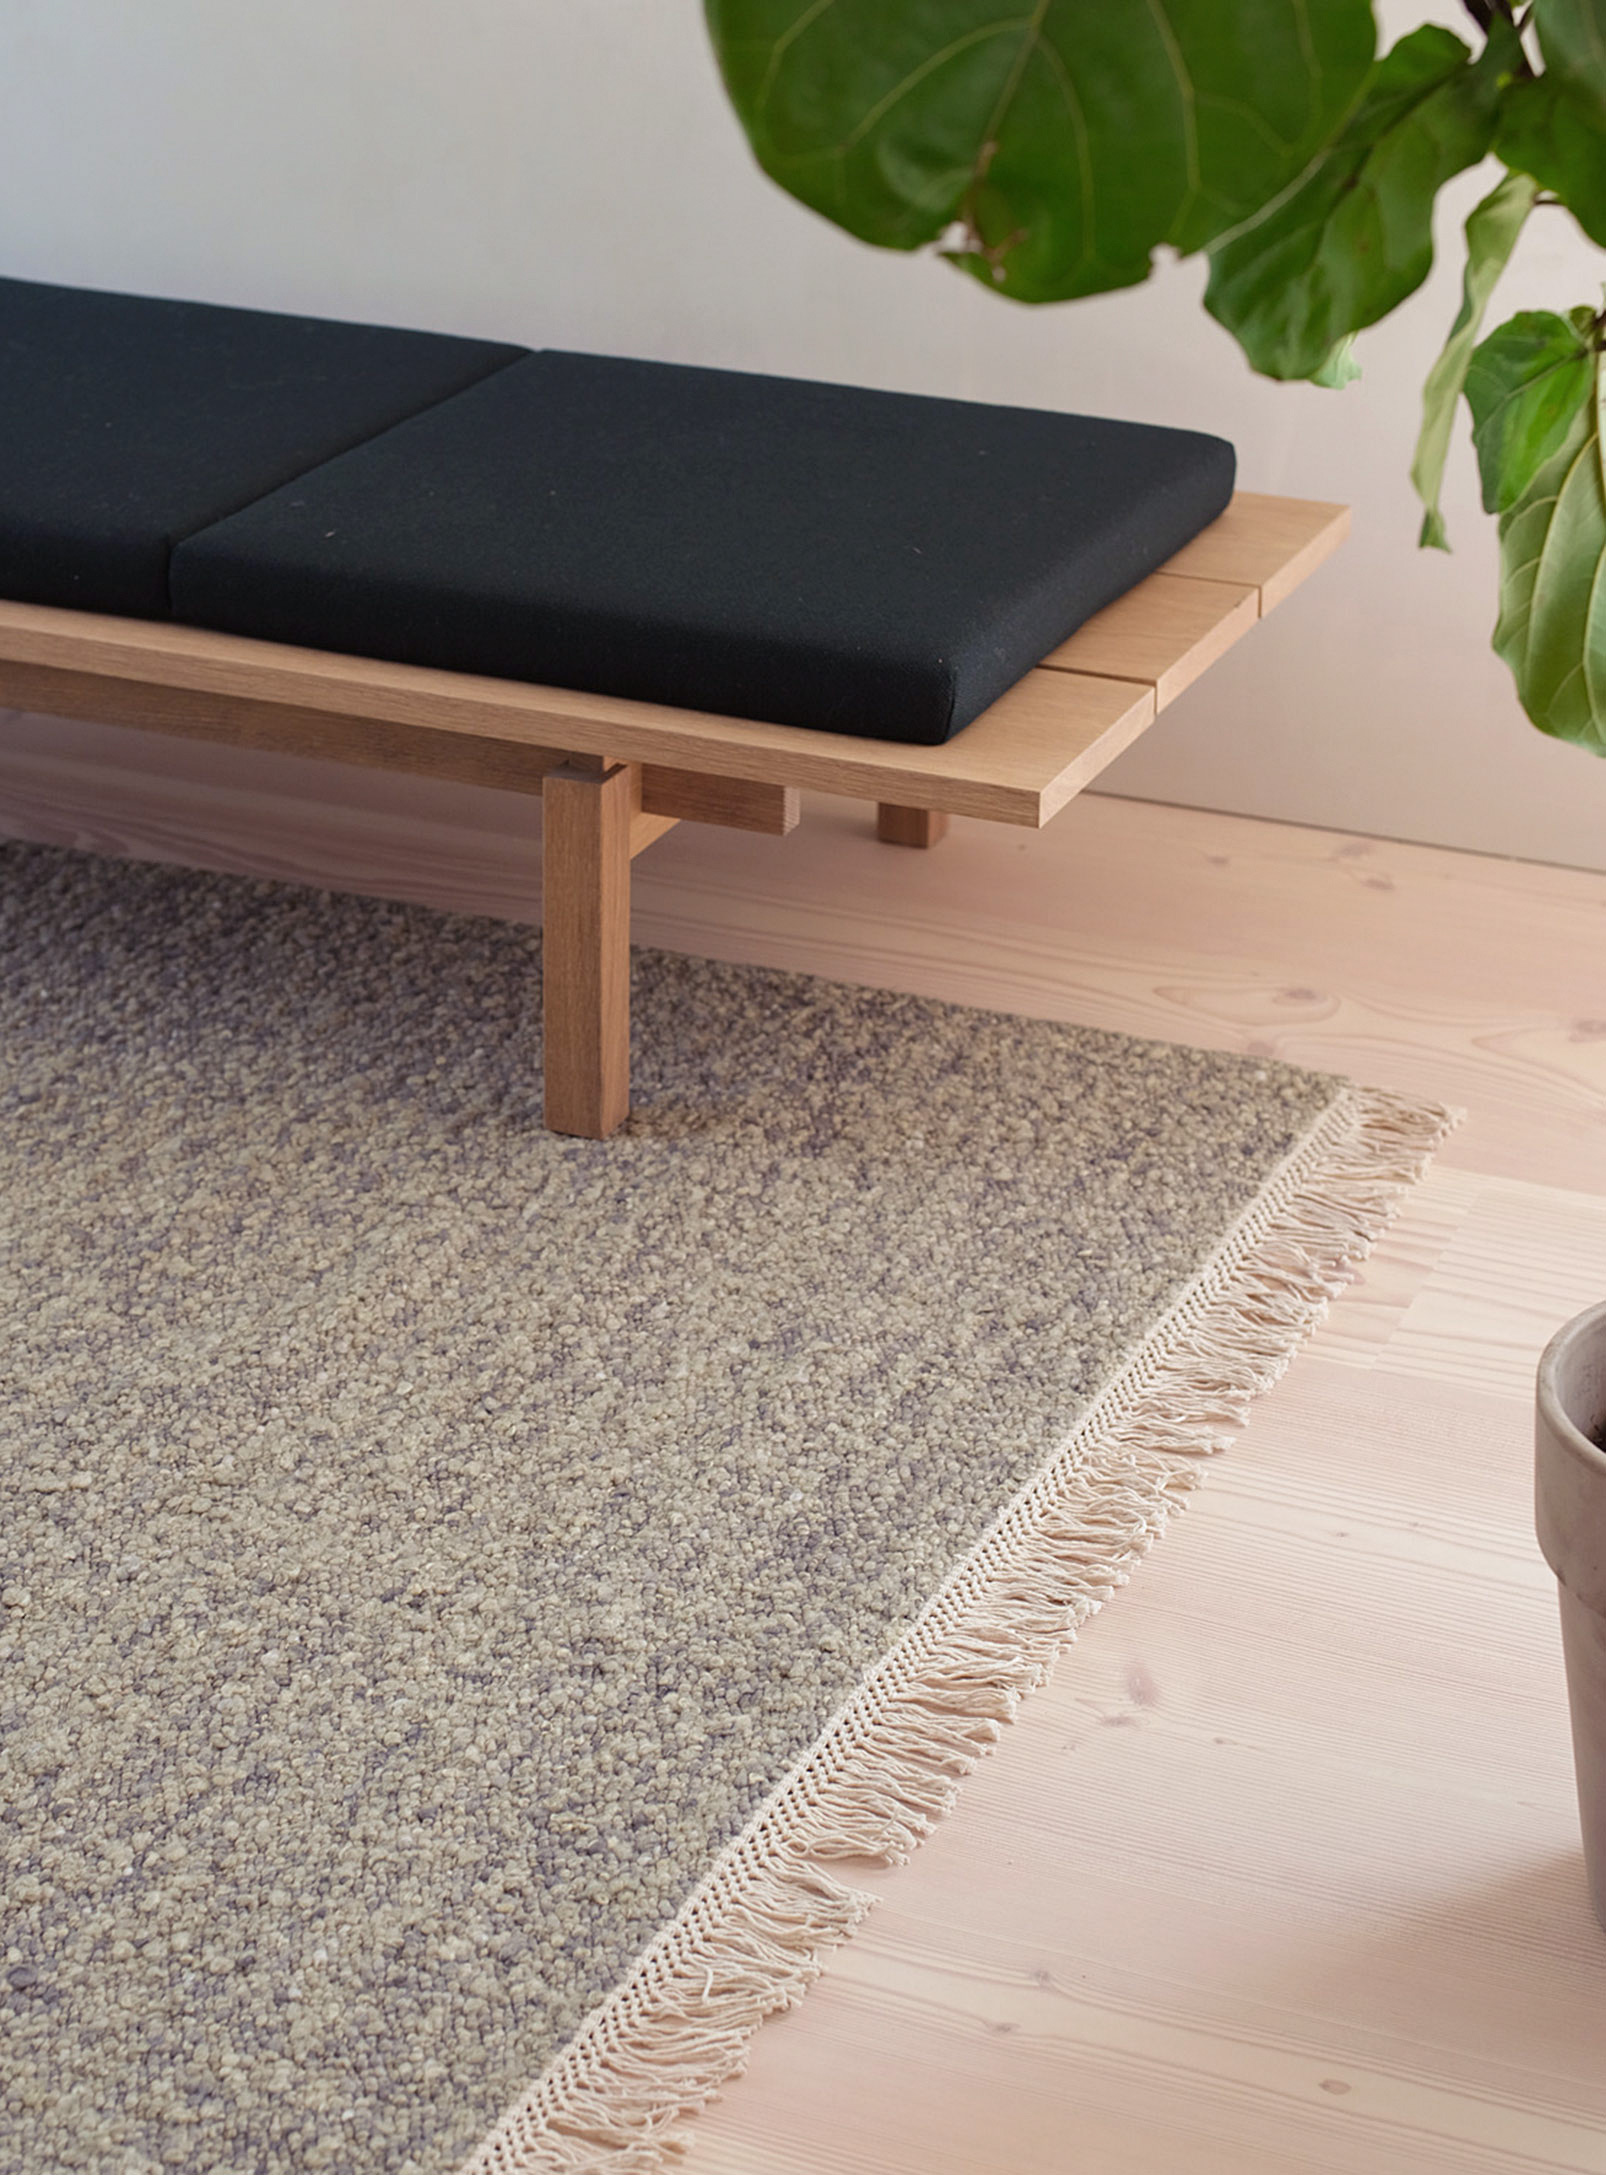 Mark Krebs - Heathered green artisanal rug See available sizes